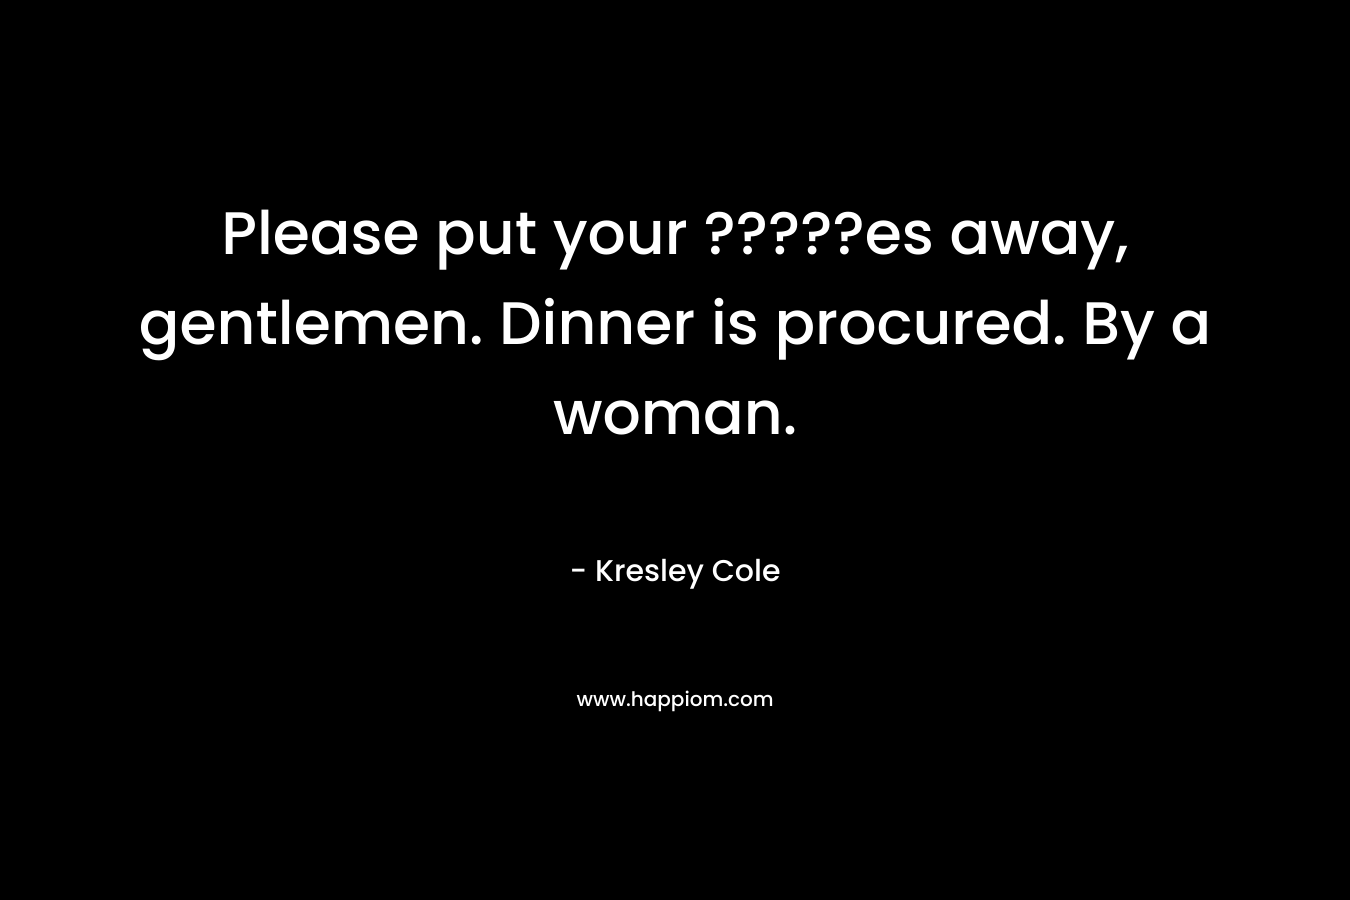 Please put your ?????es away, gentlemen. Dinner is procured. By a woman. – Kresley Cole